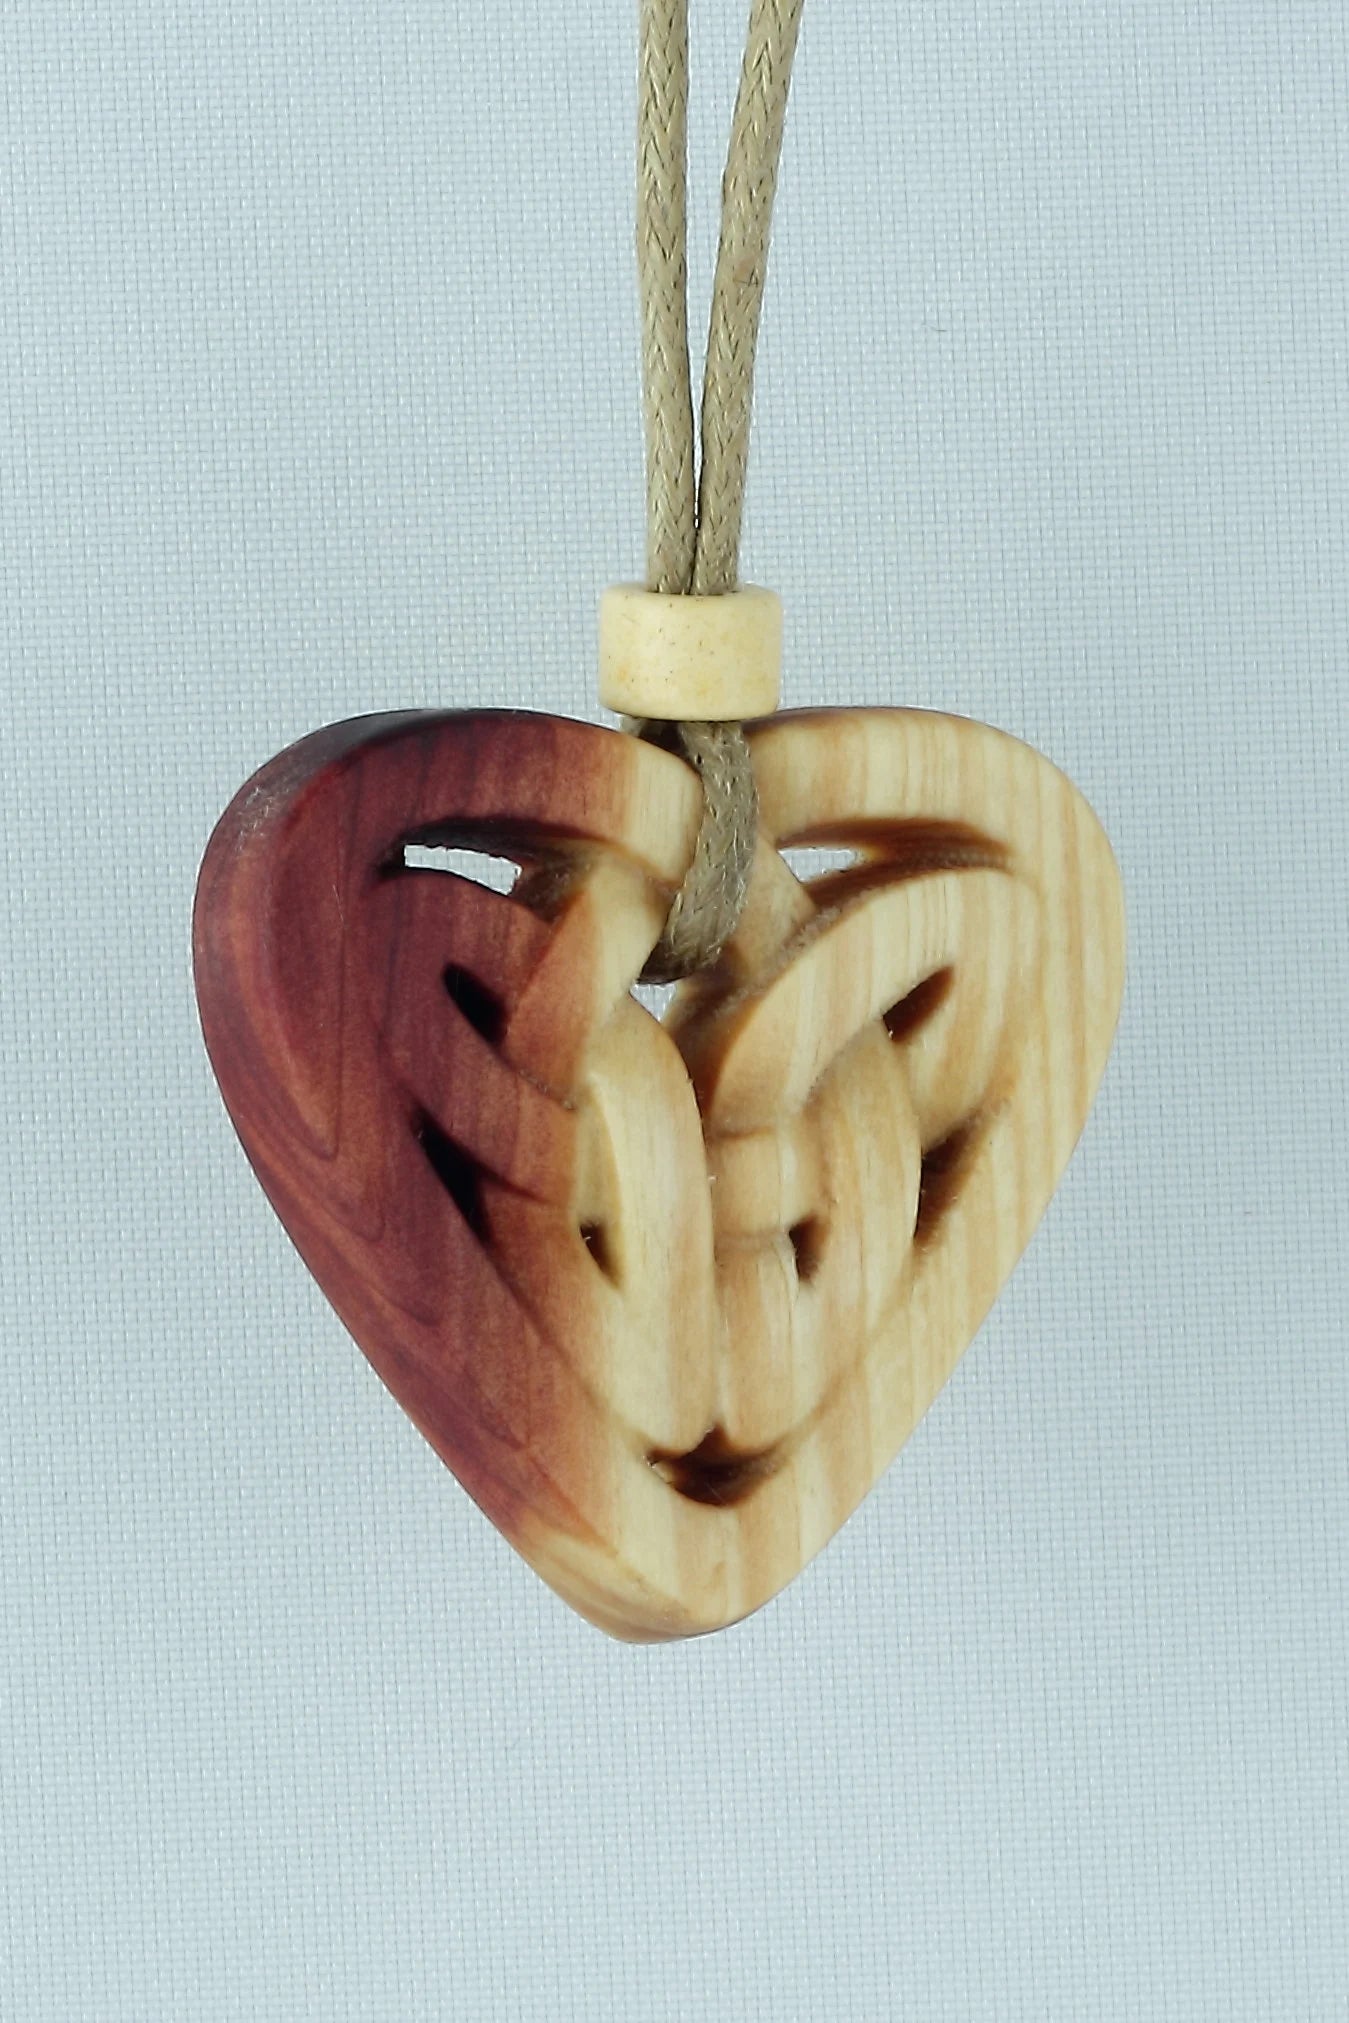 Hand Carved Celtic Heart Pendant from Juniper